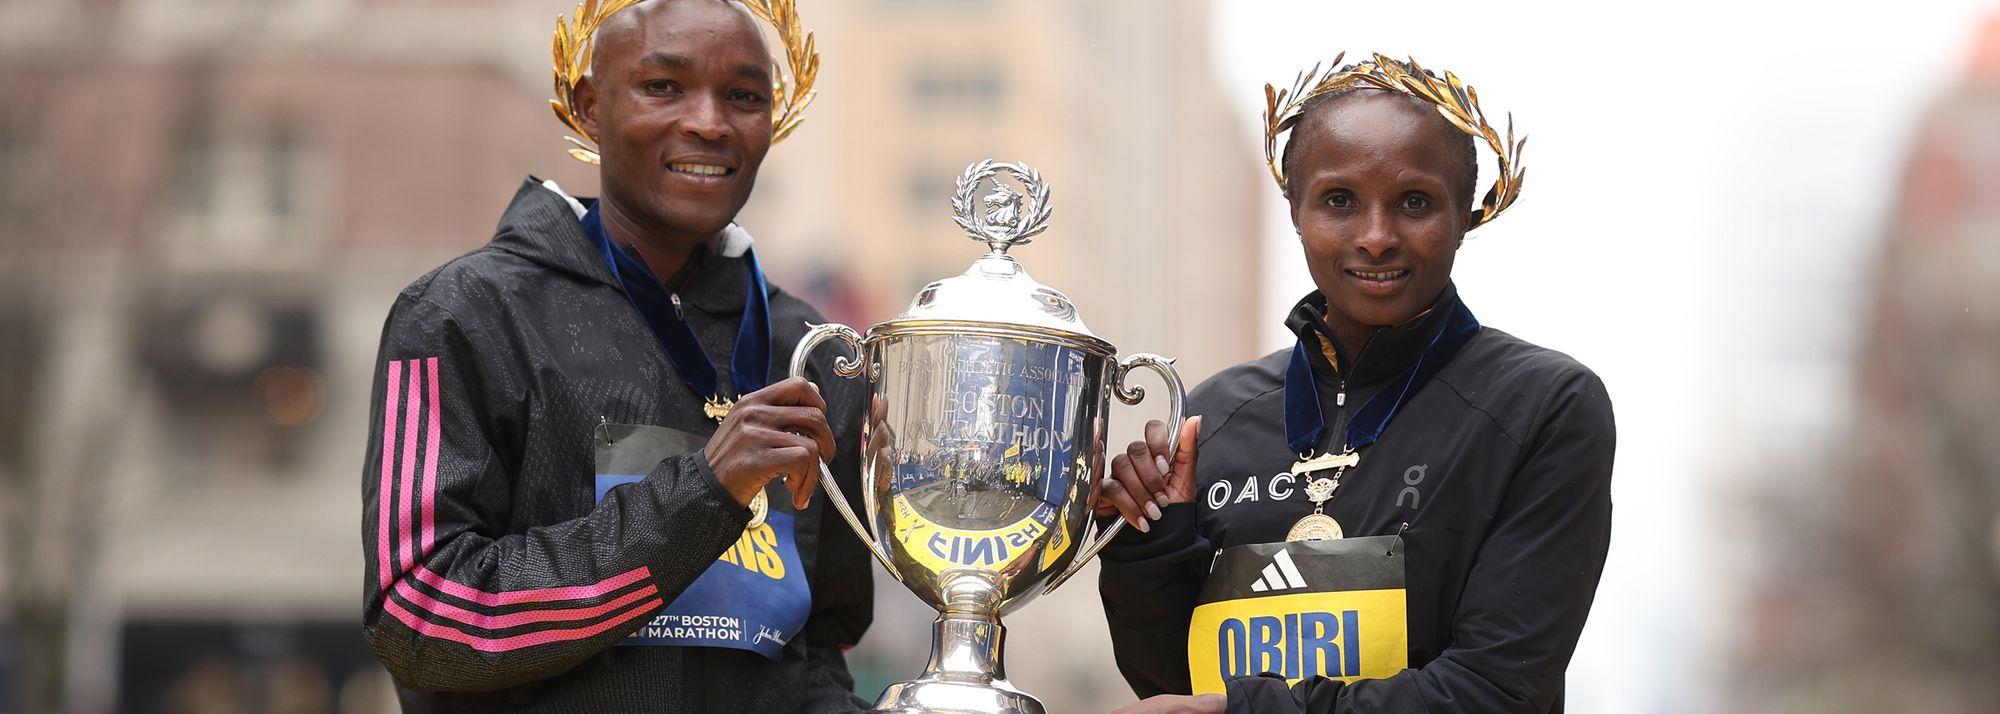 Hellen Obiri and Evans Chebet will defend their Boston Marathon titles against formidable fields